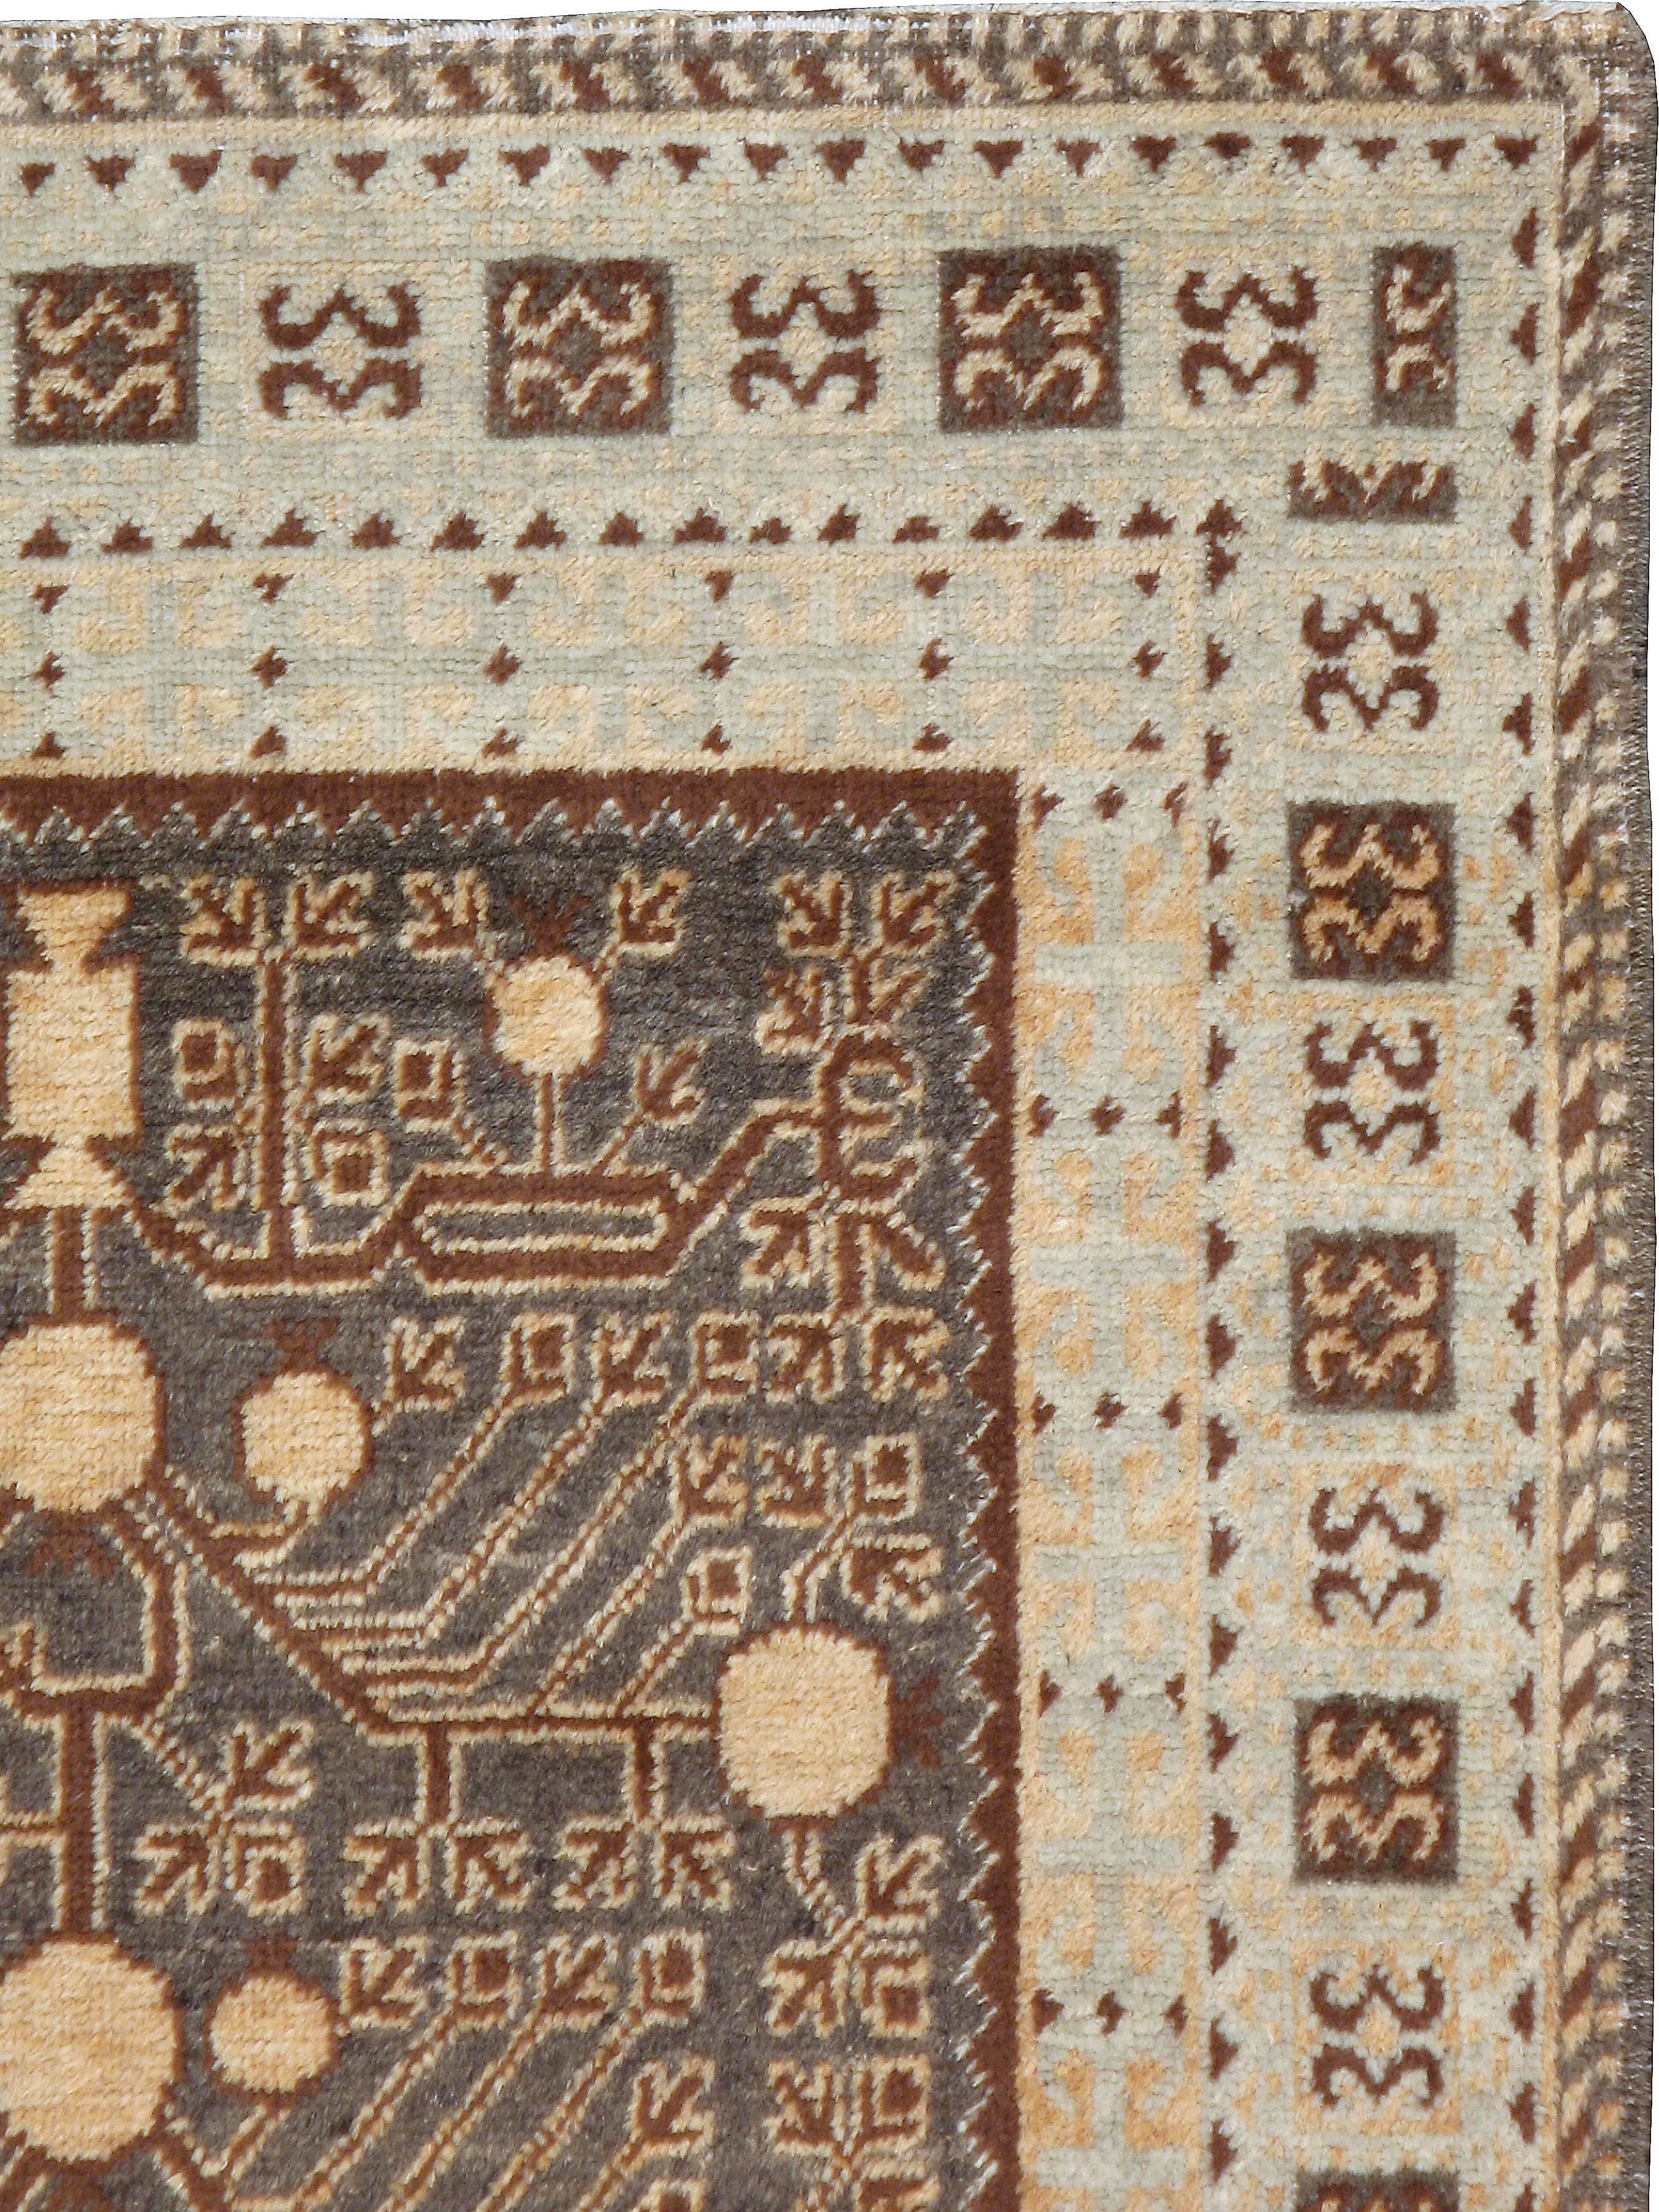 An antique East Turkestan Khotan carpet from the second quarter of the 20th century.